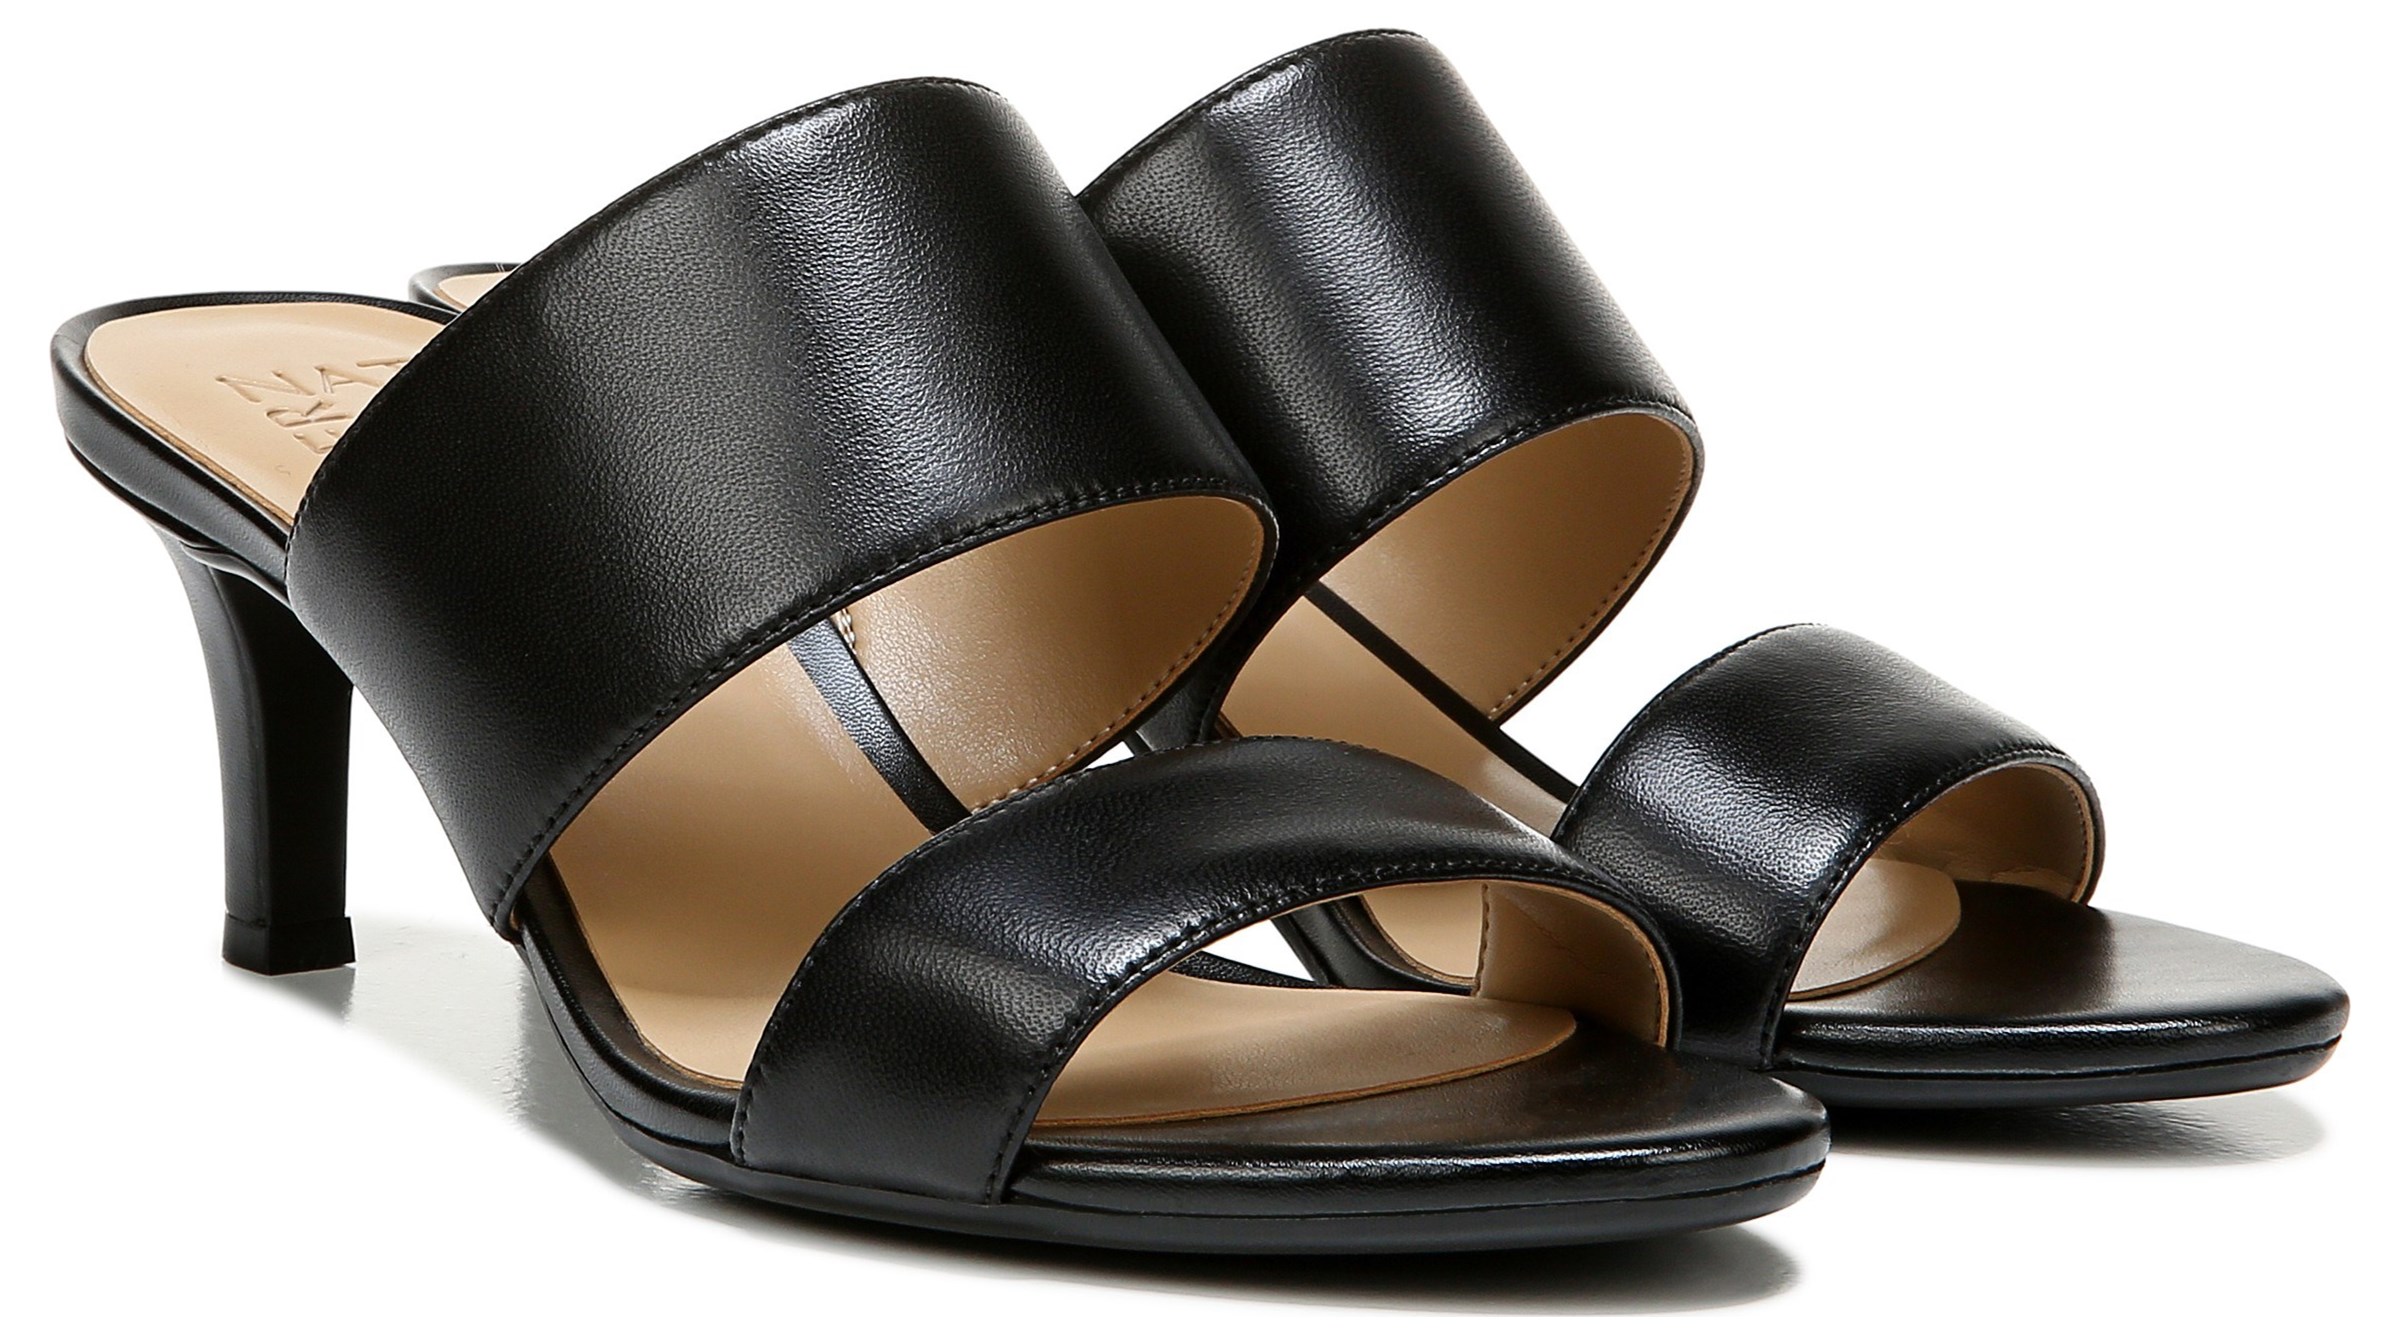 Tibby Sandal | Women's Sandals | Naturalizer shoes since 1927.